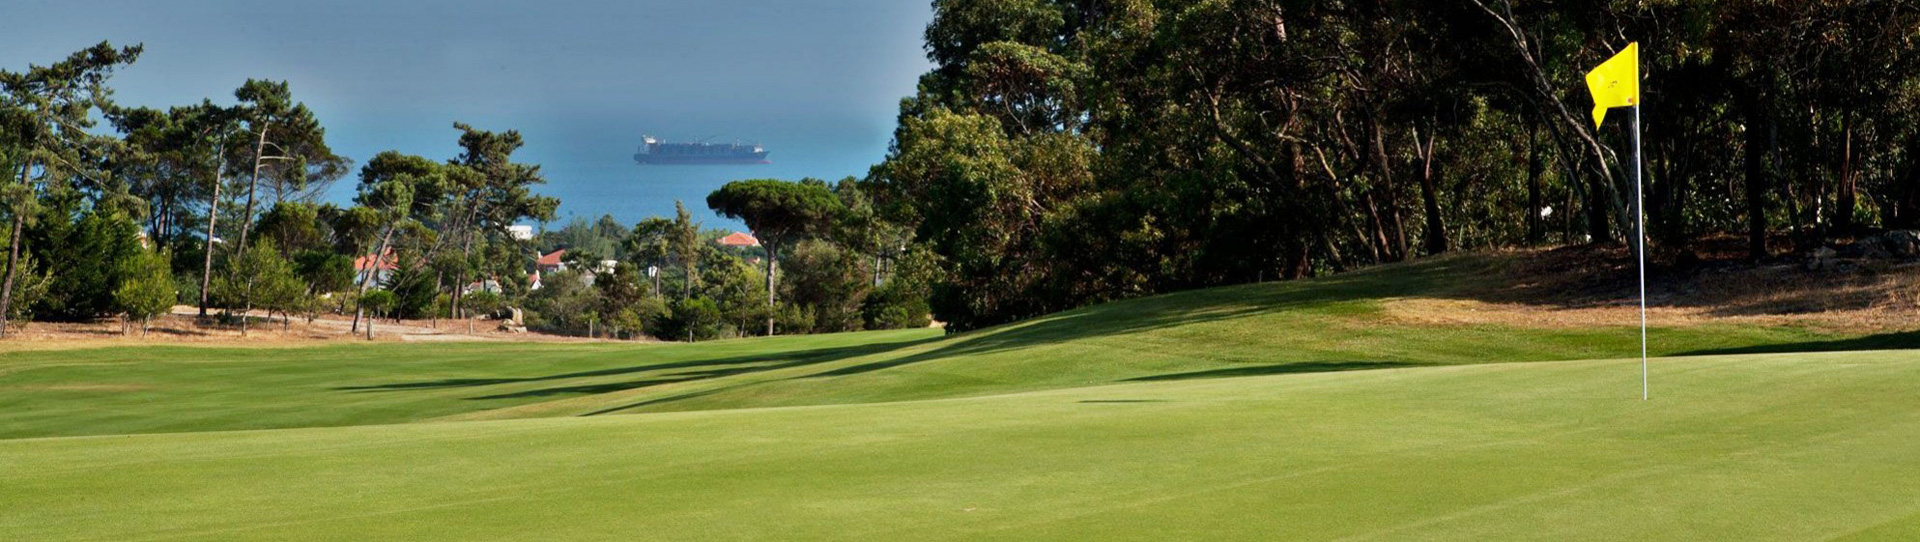 Portugal golf courses - Golf Estoril - Photo 1